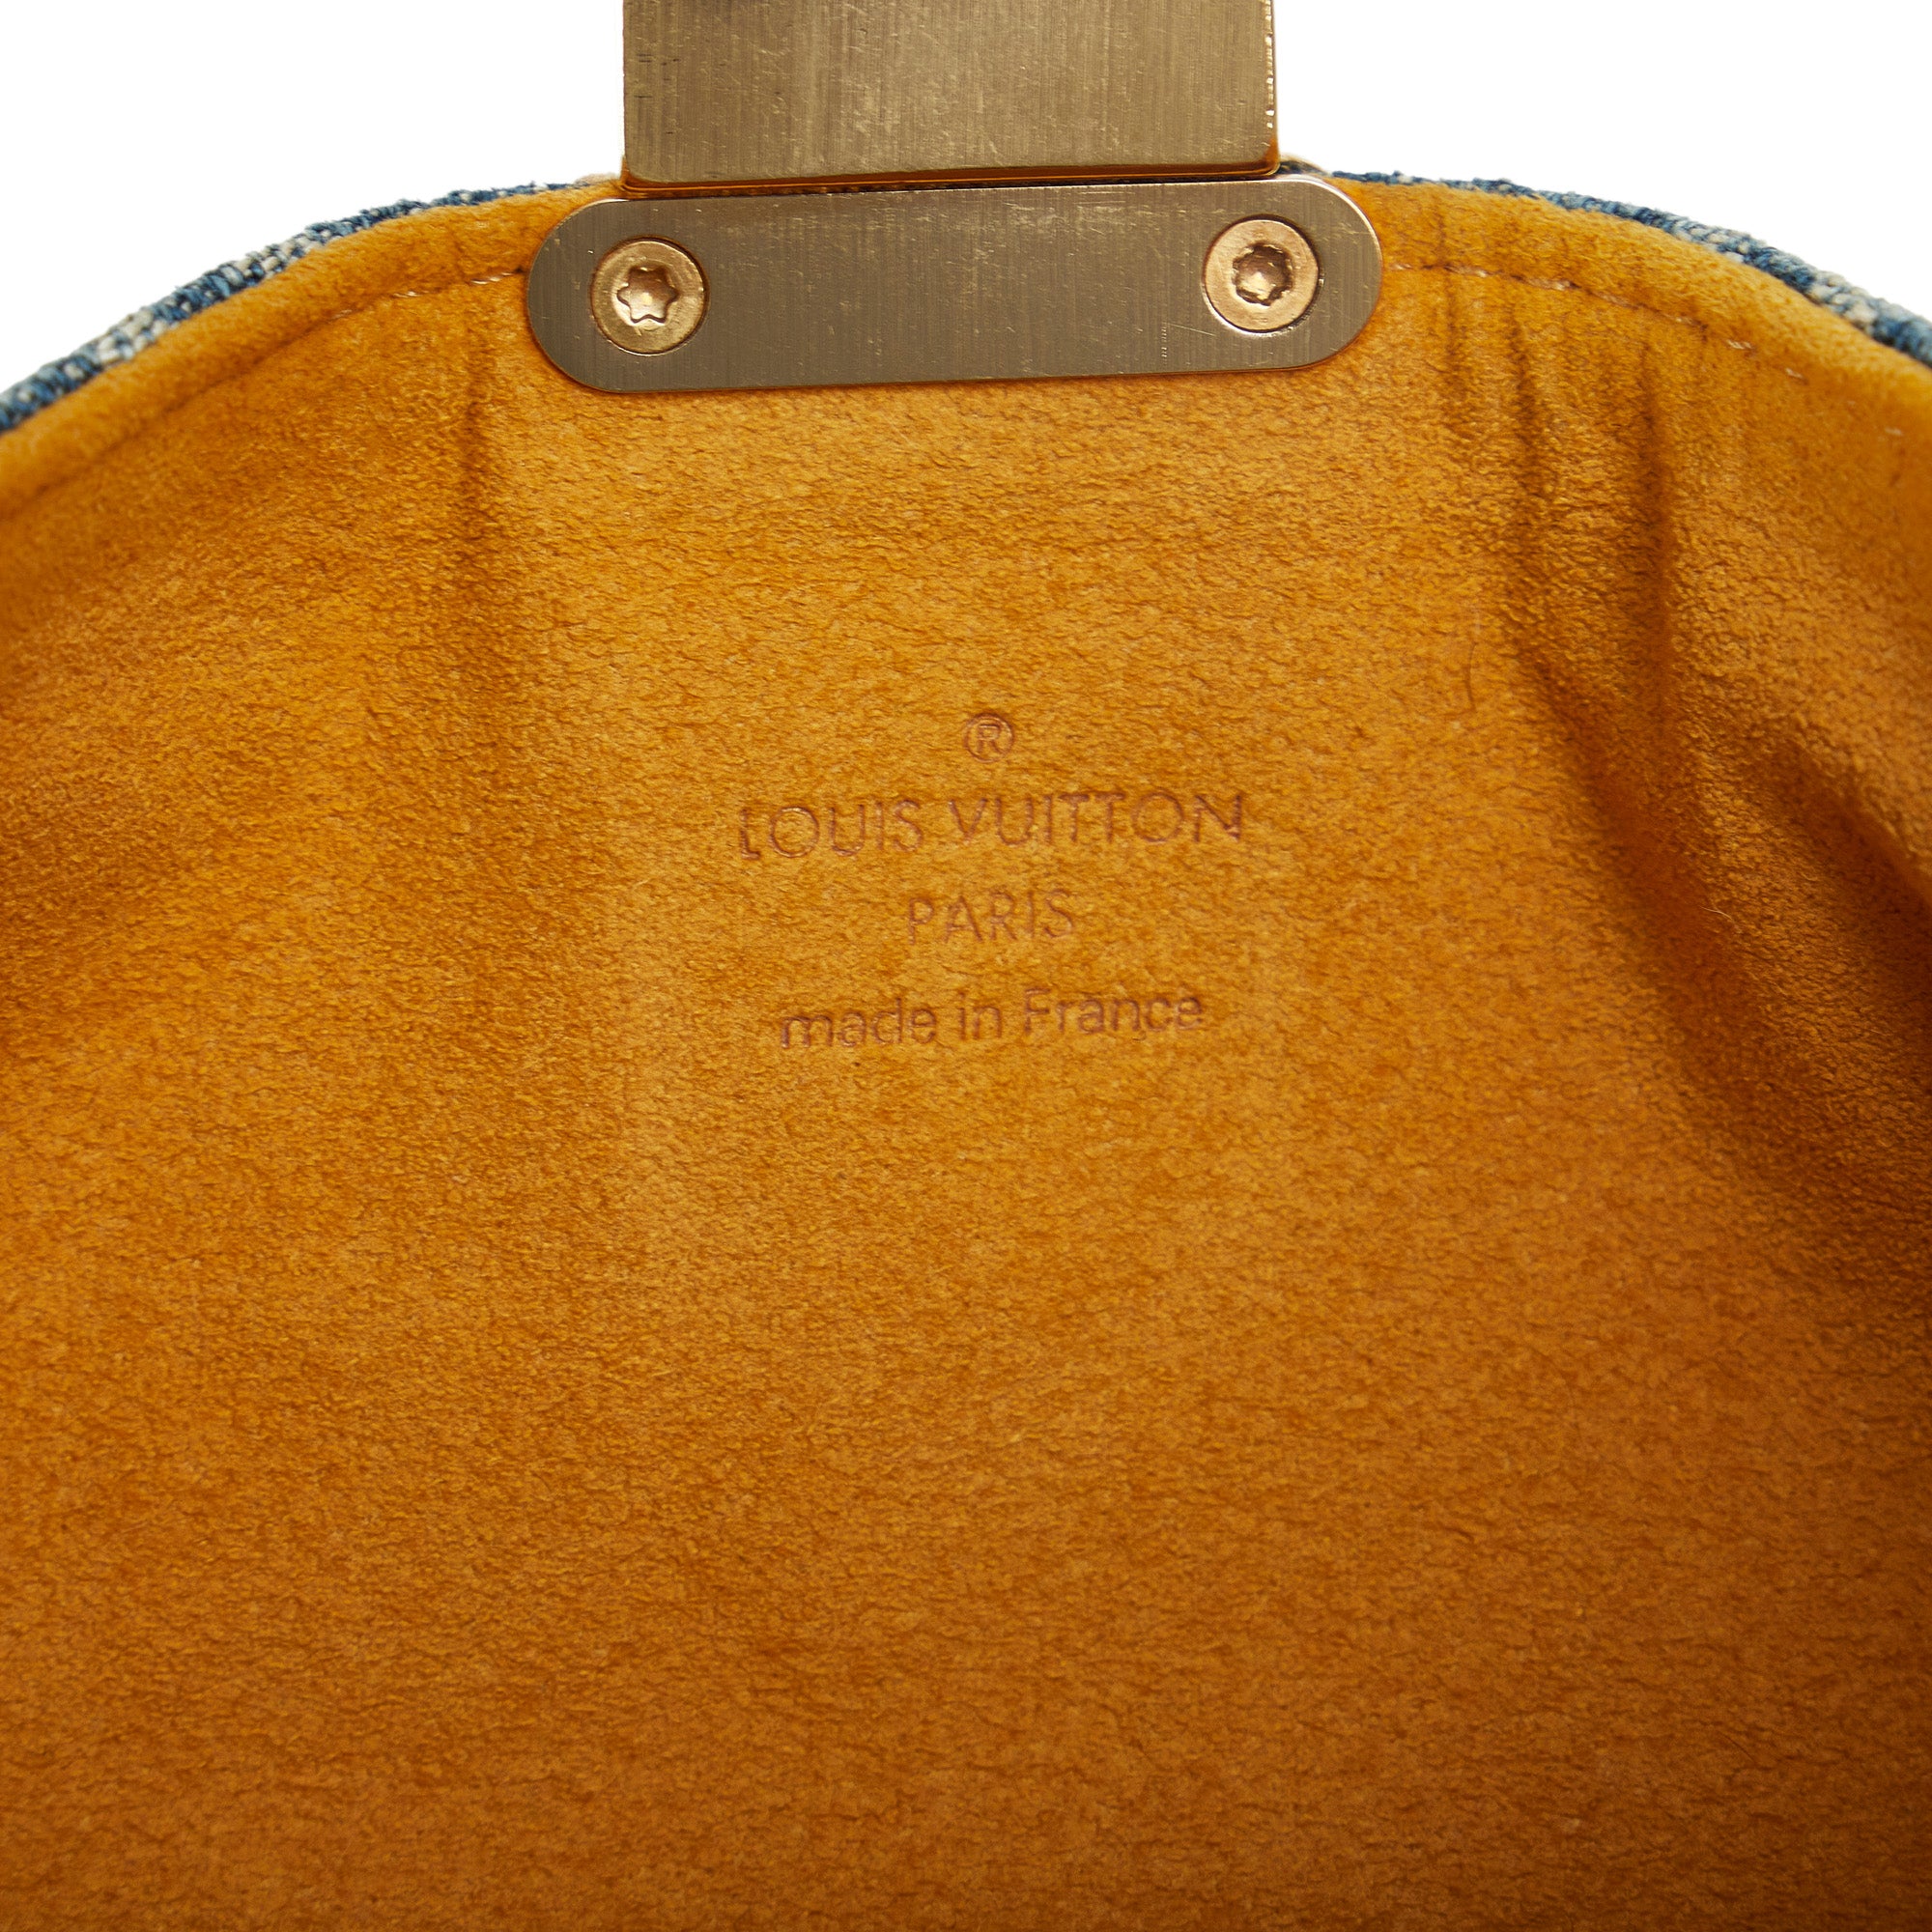 Louis Vuitton logo plate clutch bag